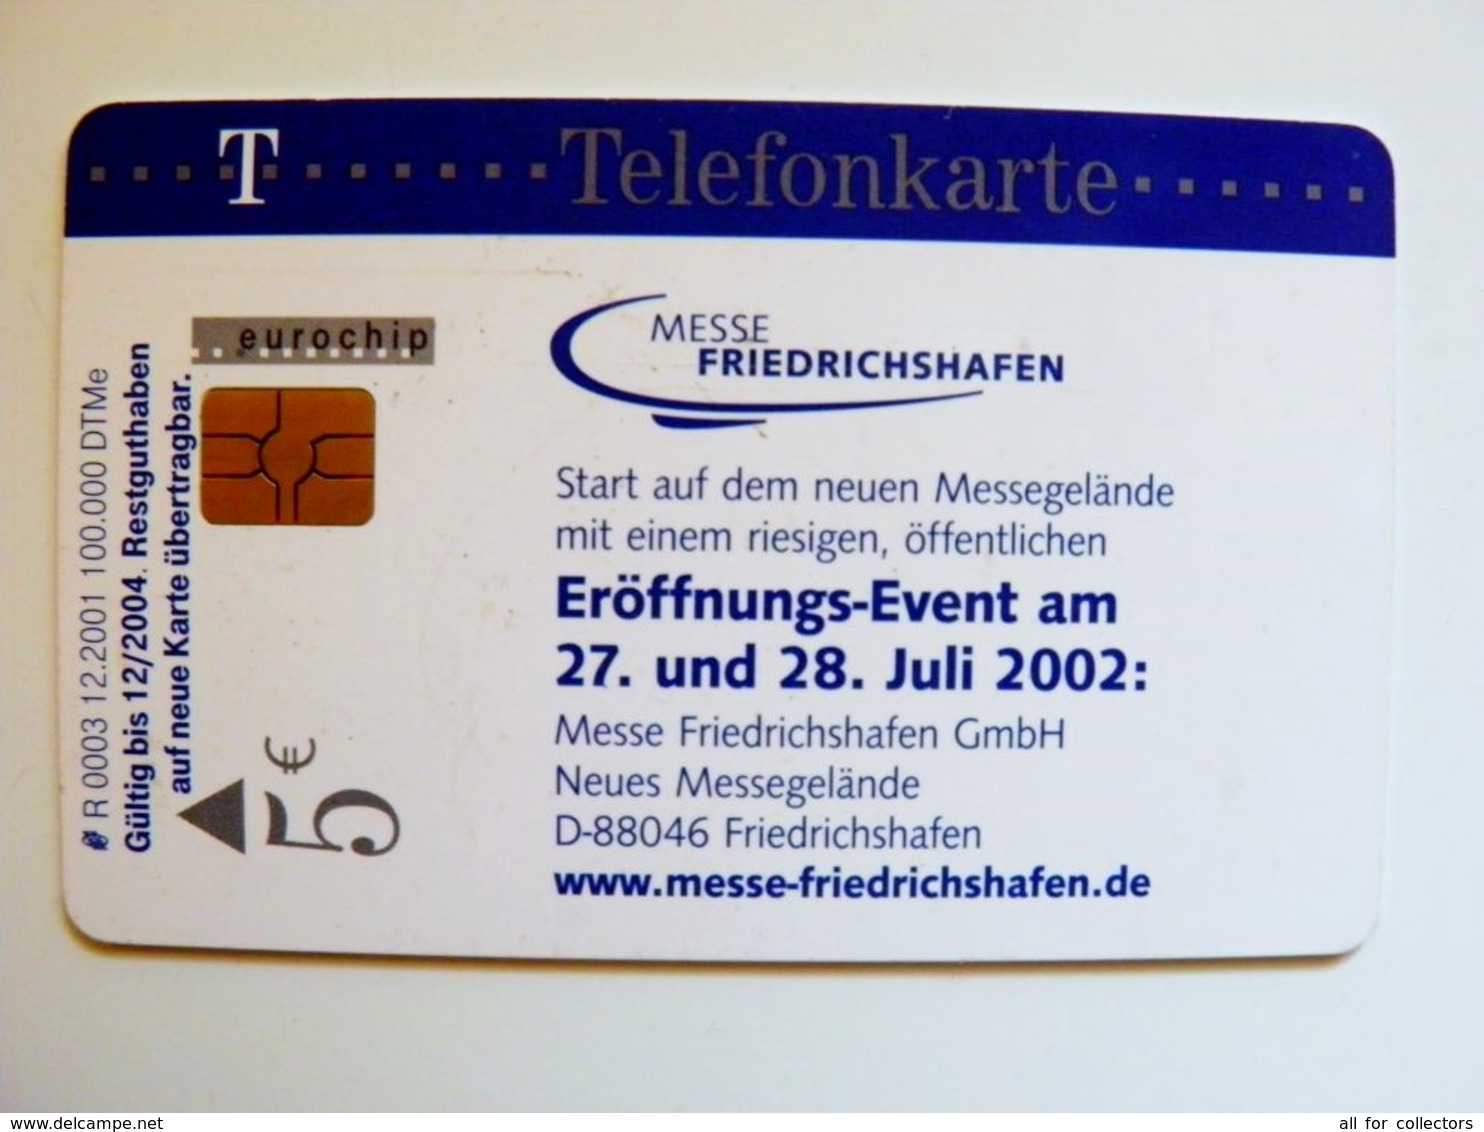 Chip Phonecard Germany 5DM R0003 12,2001 100,000 Messe Friedrichshafen - R-Series : Regions